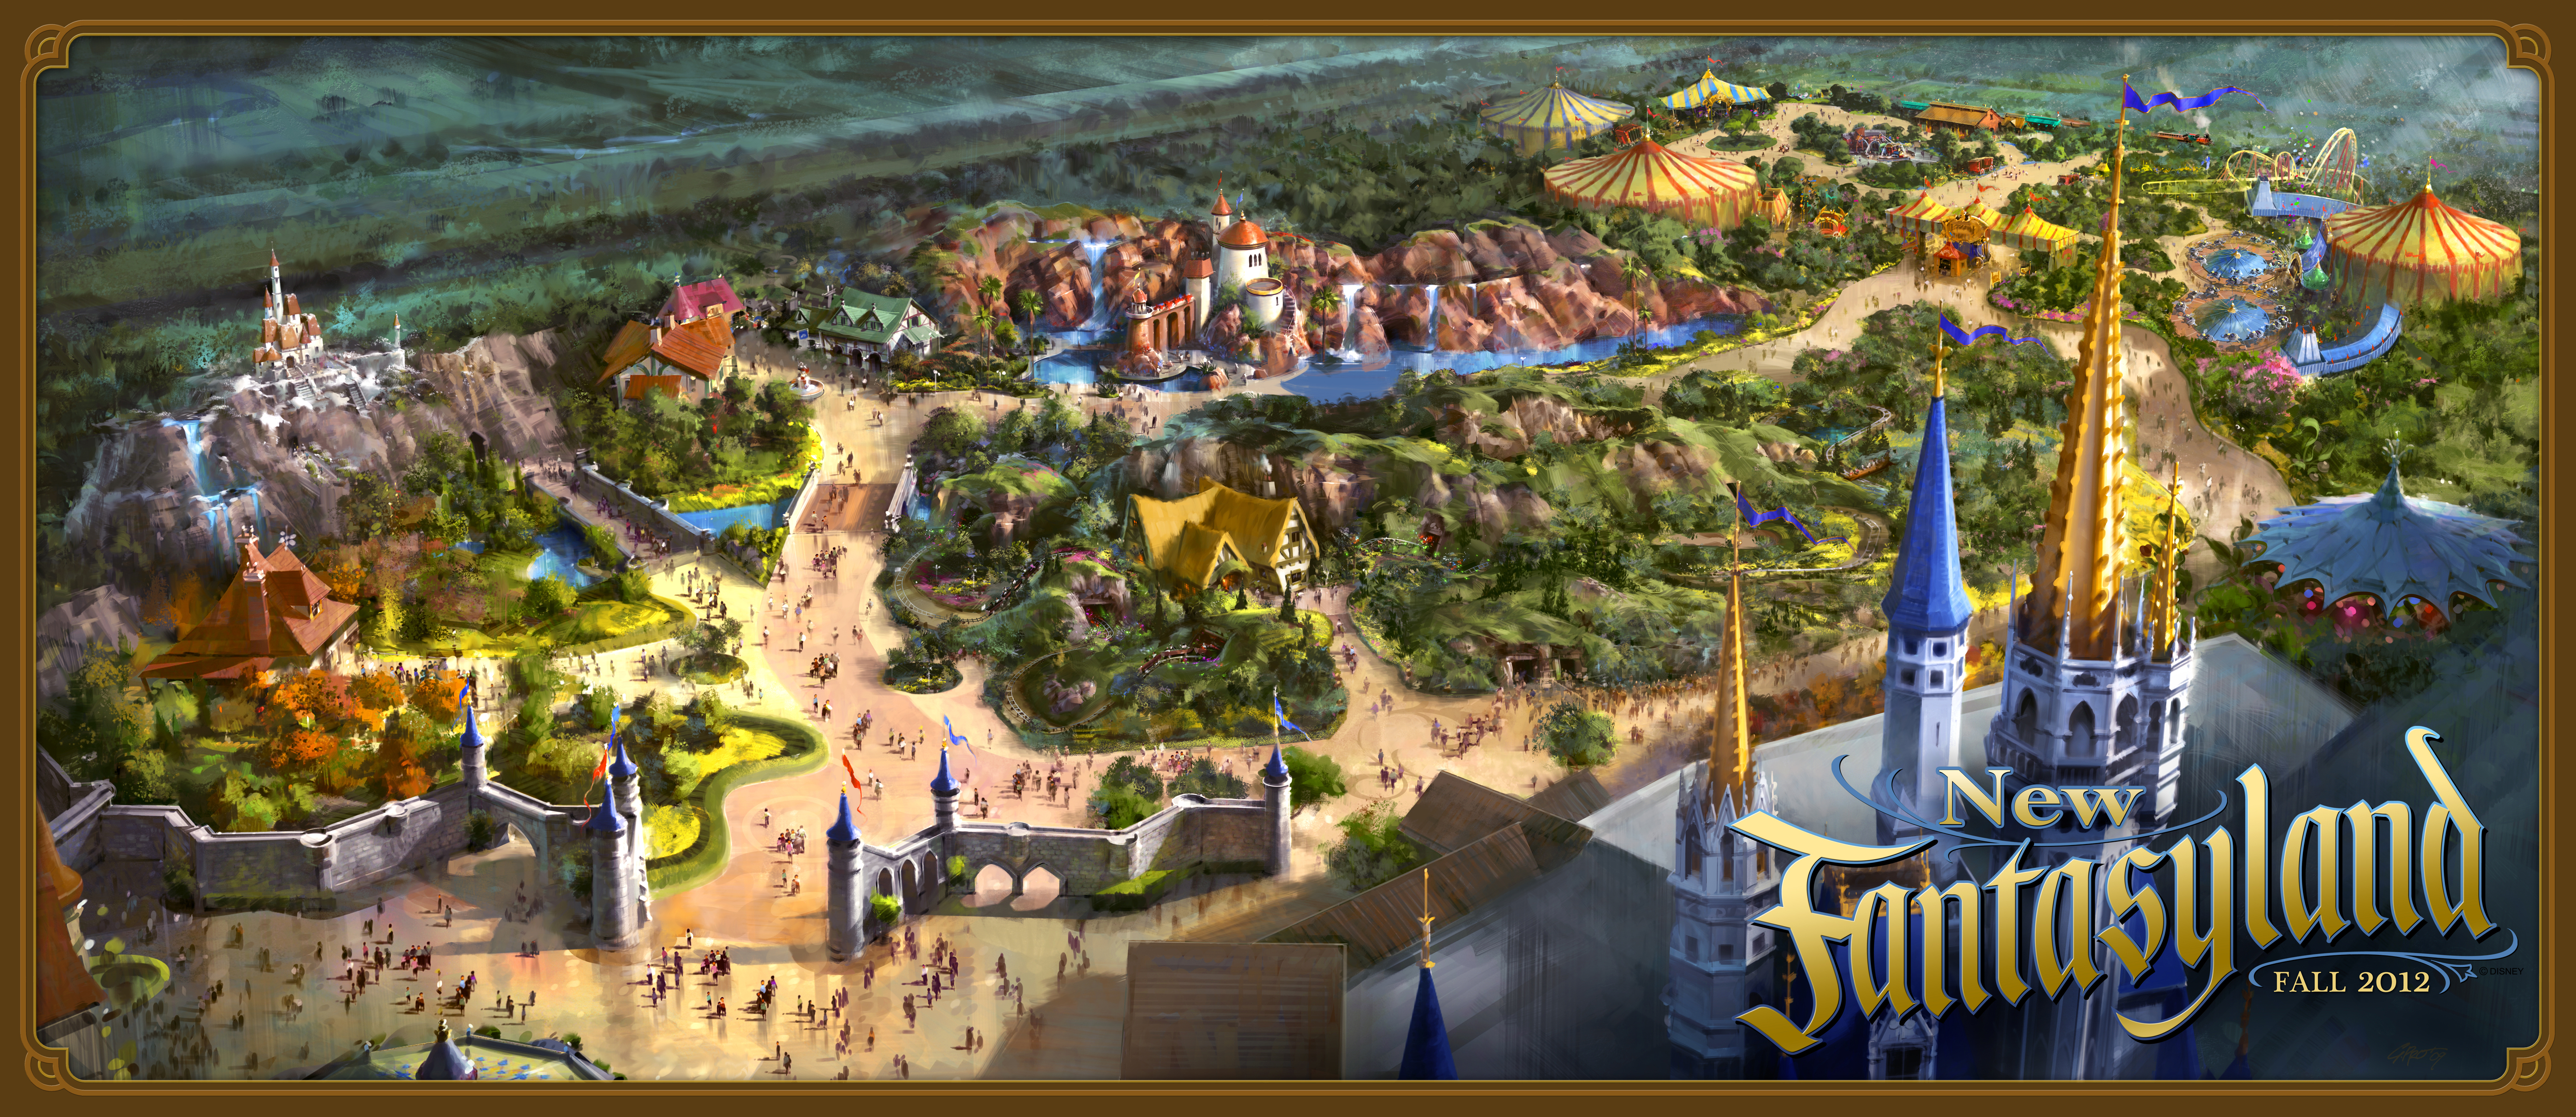 map of fantasy land walt disney world magic kingdom